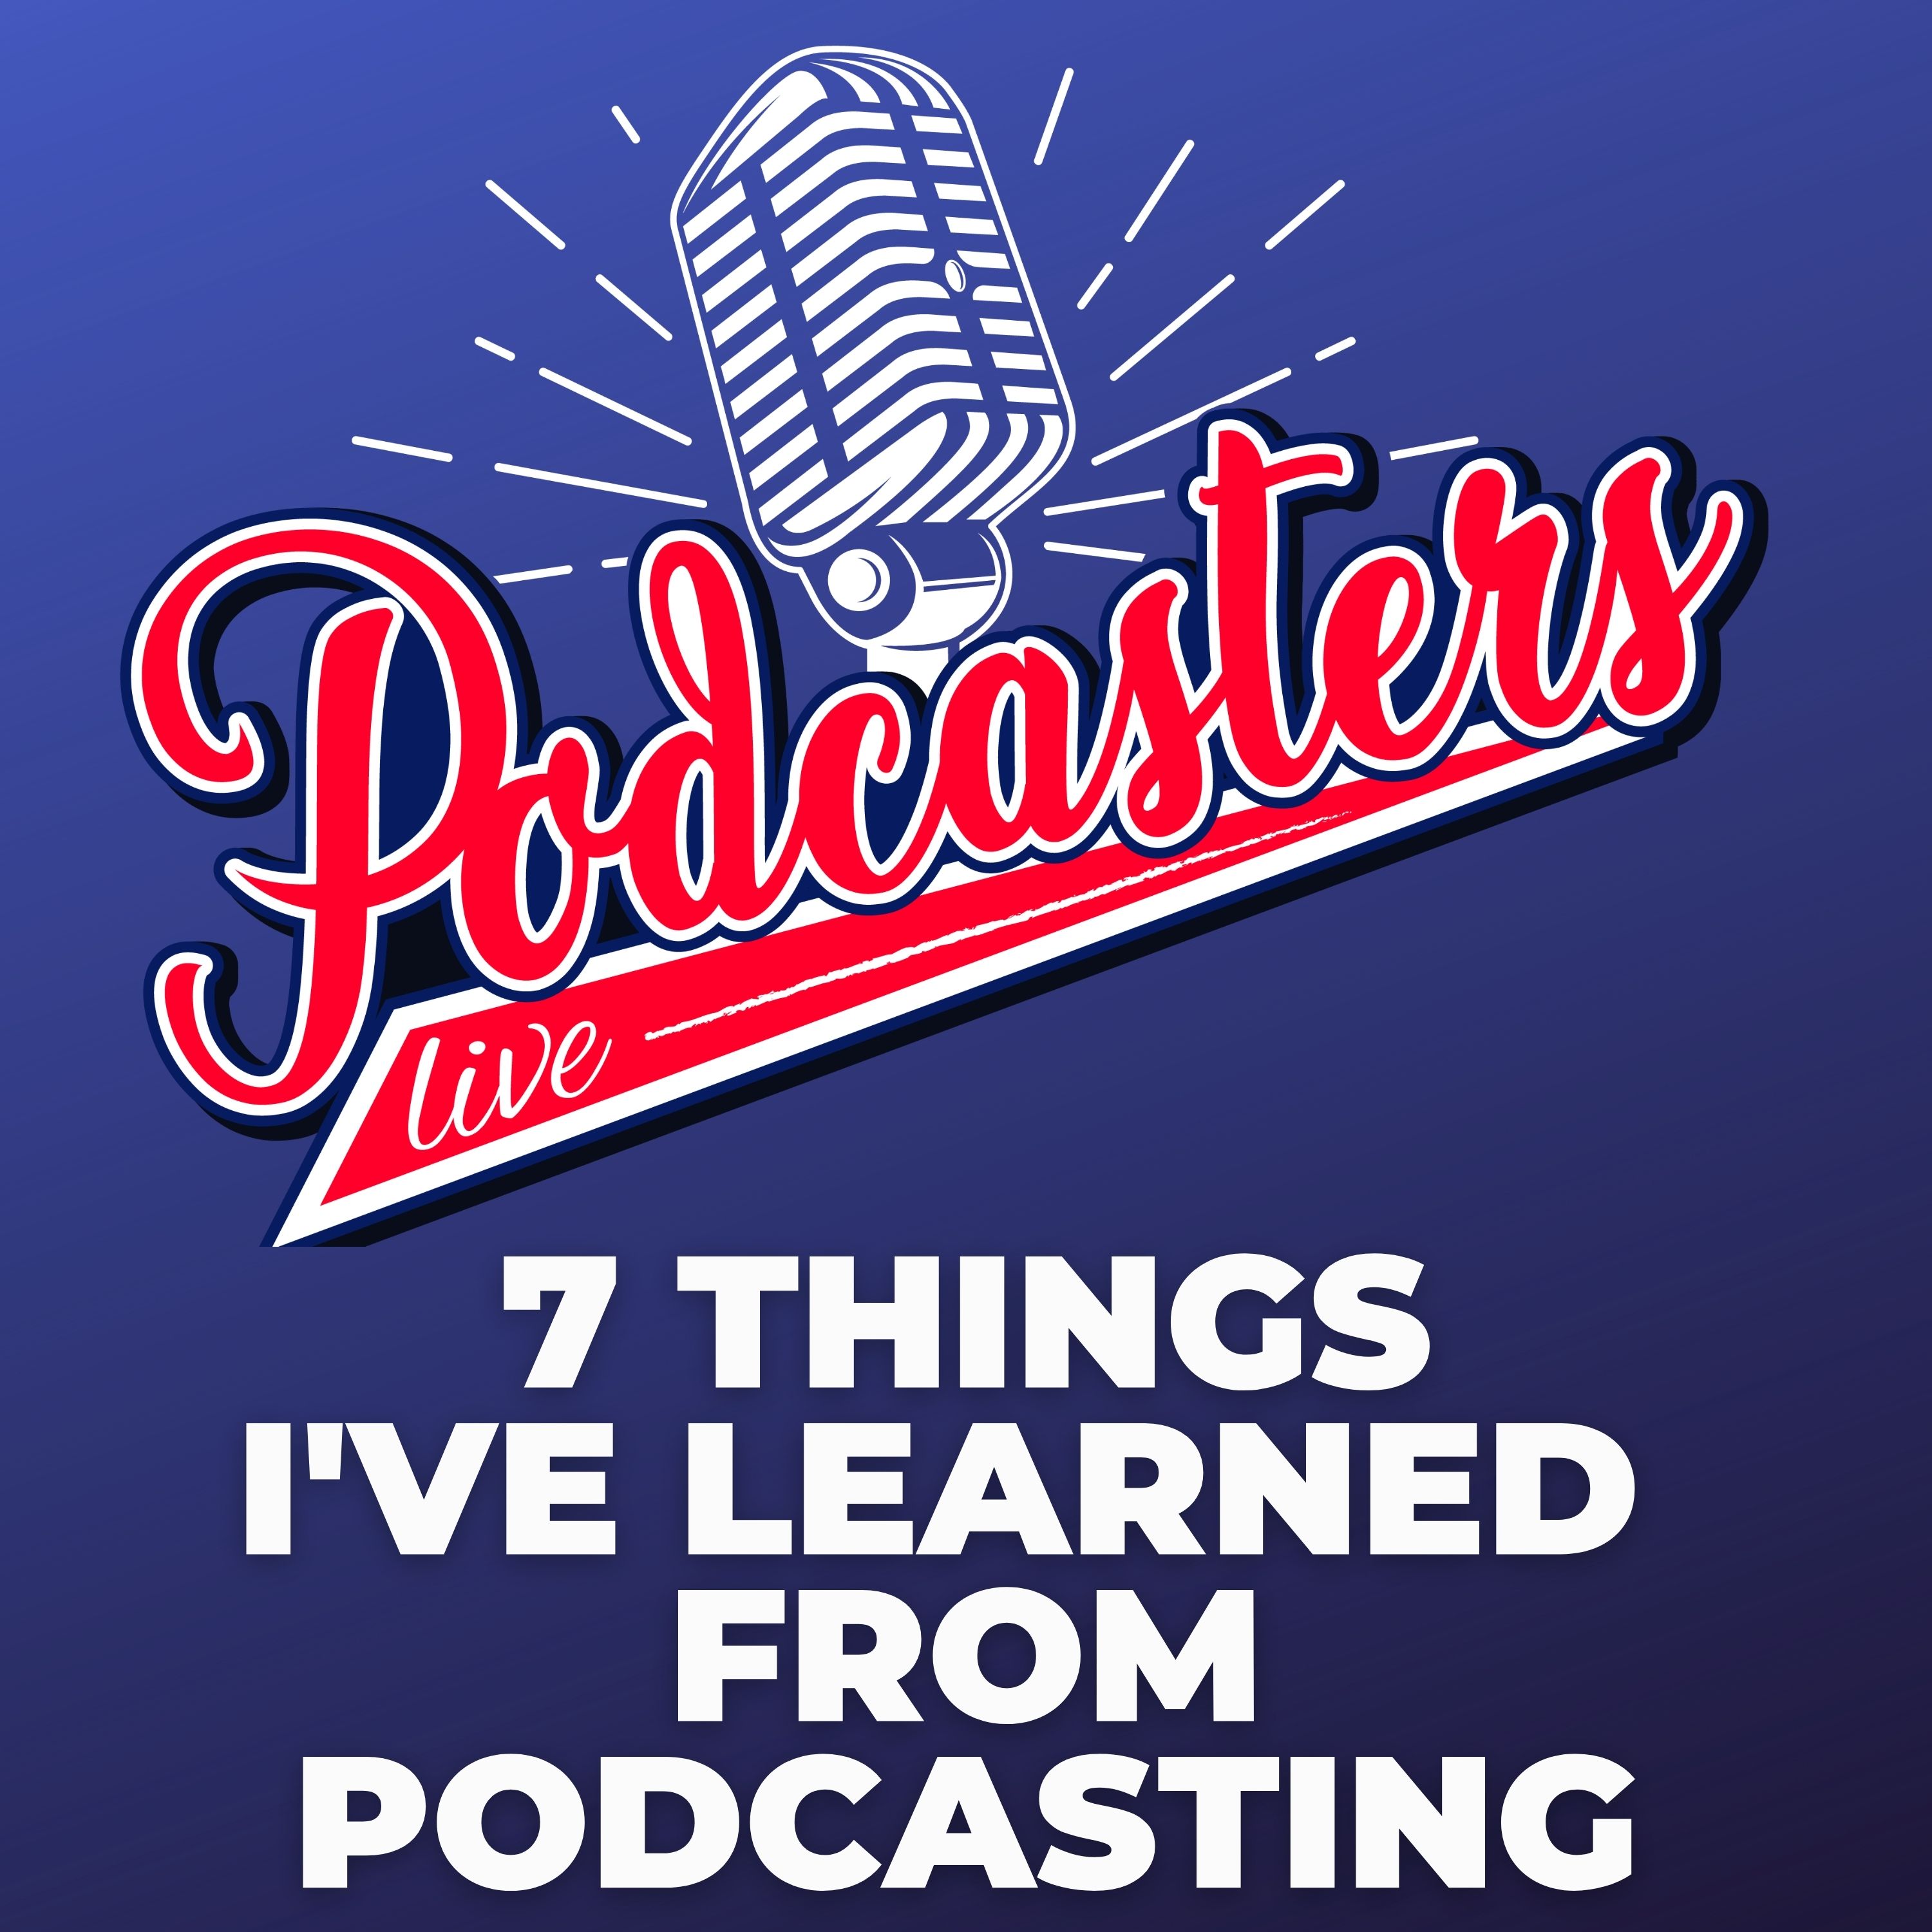 Artwork for podcast Podcasters Live!!!